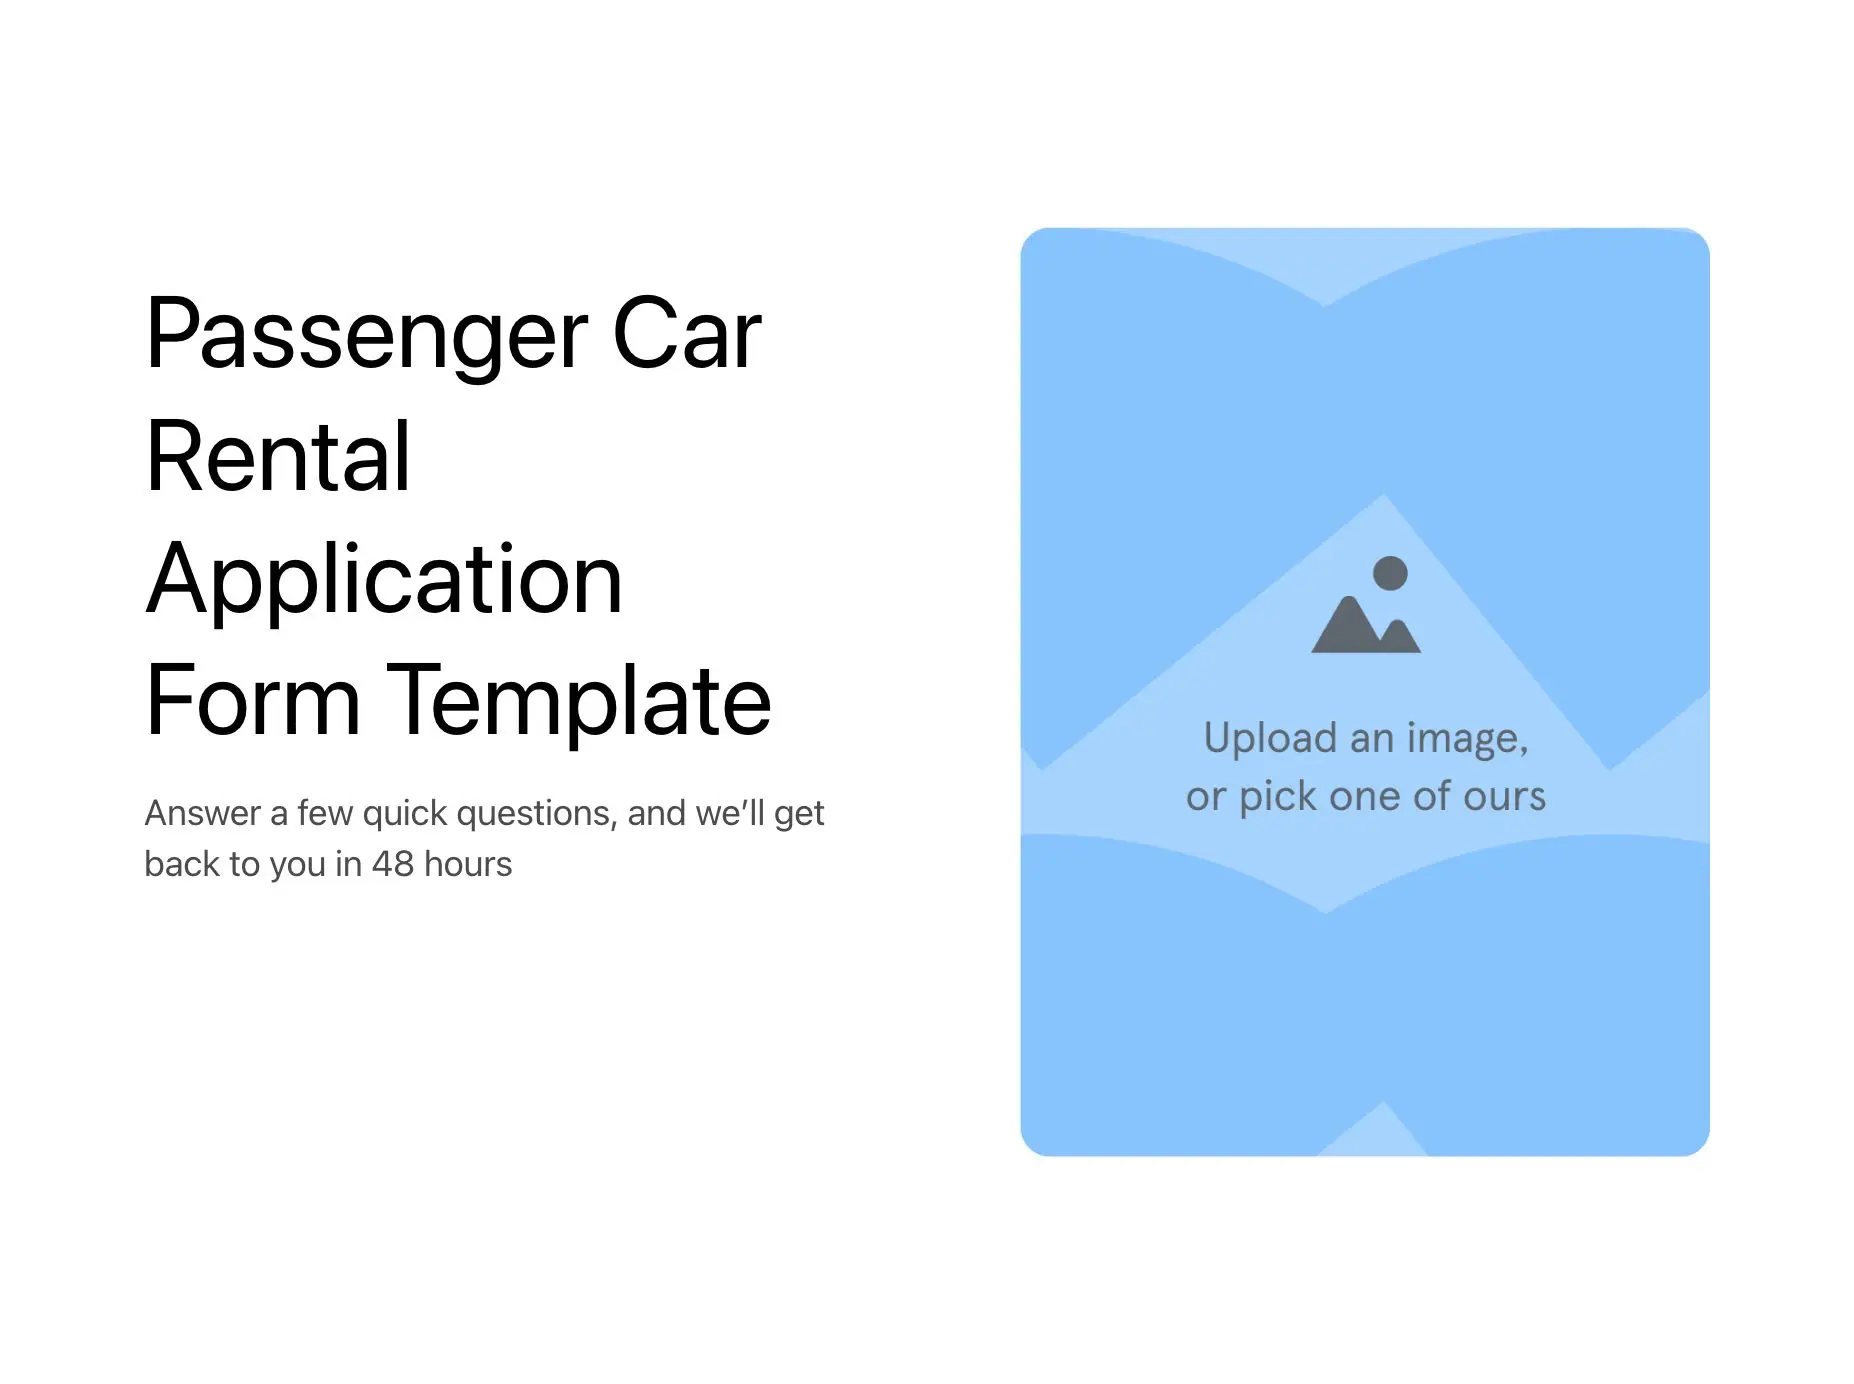 Passenger Car Rental Application Form Template Hero